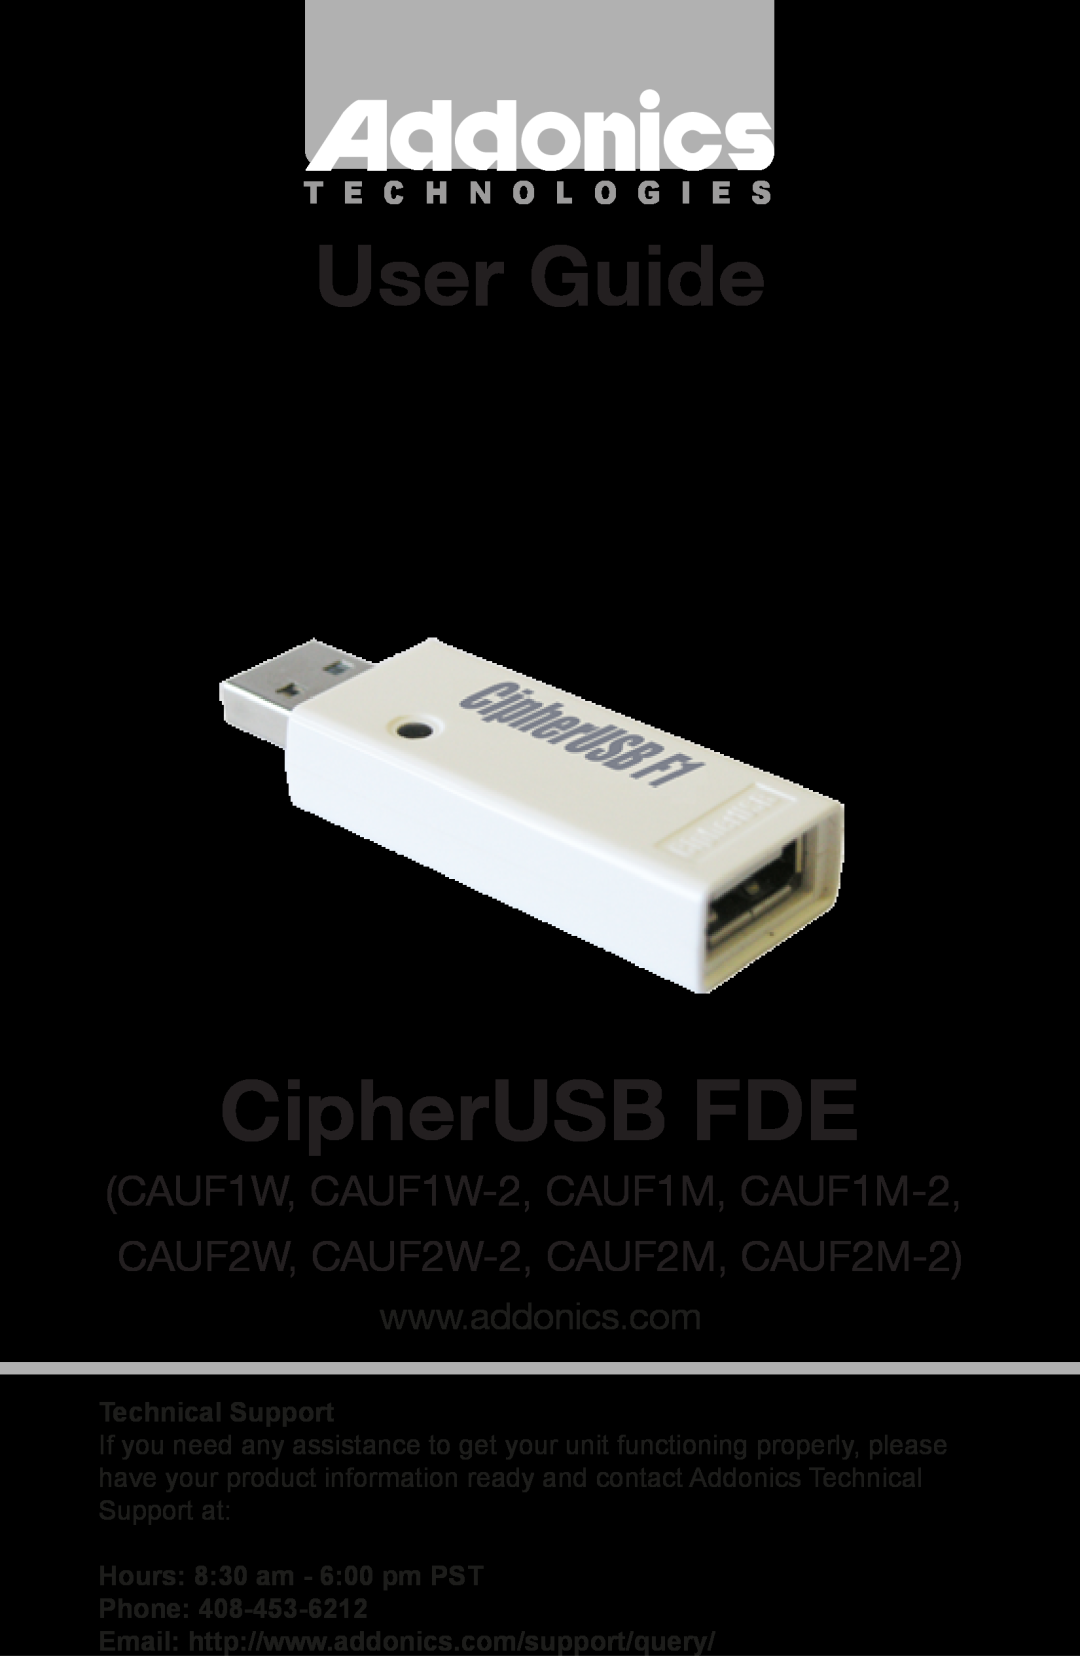 Addonics Technologies CAUF1W-2, CAUF1M-2 manual User Guide CipherUSB FDE, T E C H N O L O G I E S, Technical Support 